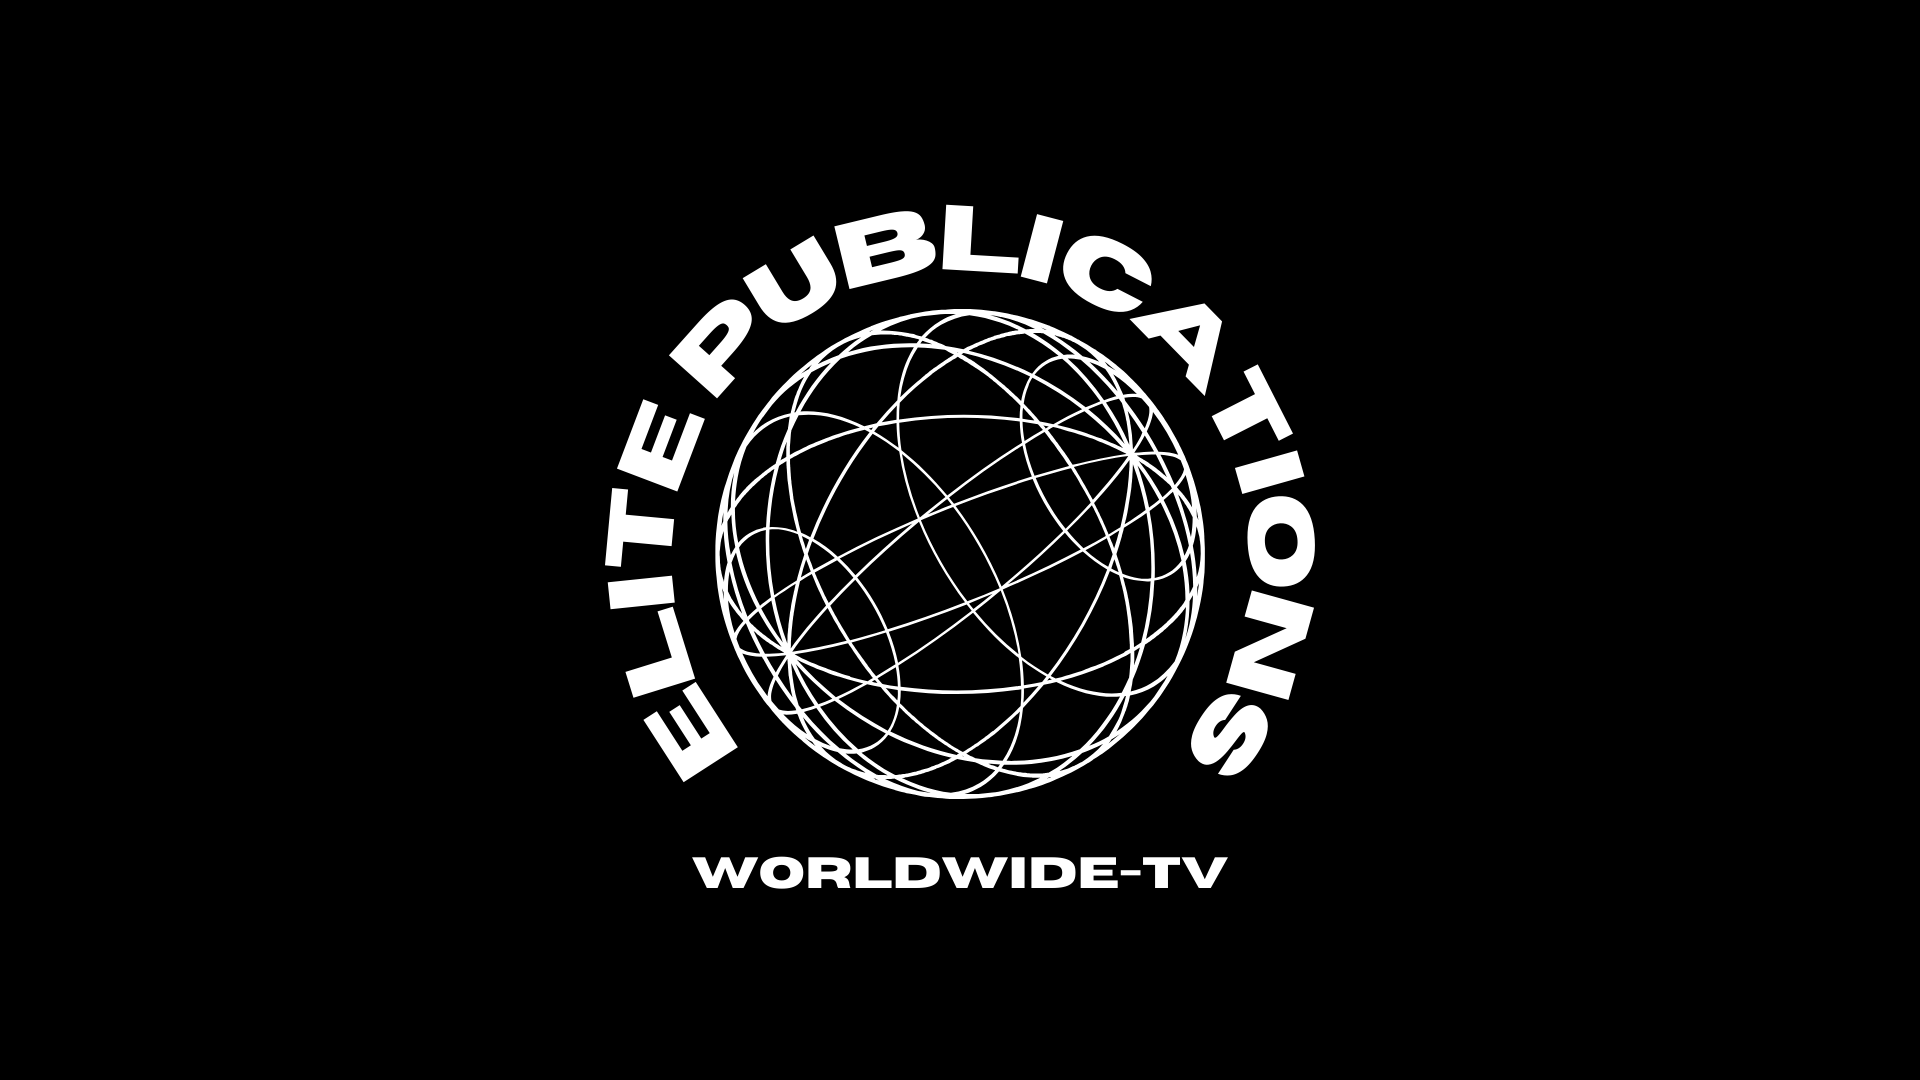 Elite Publications Worldwide-TV